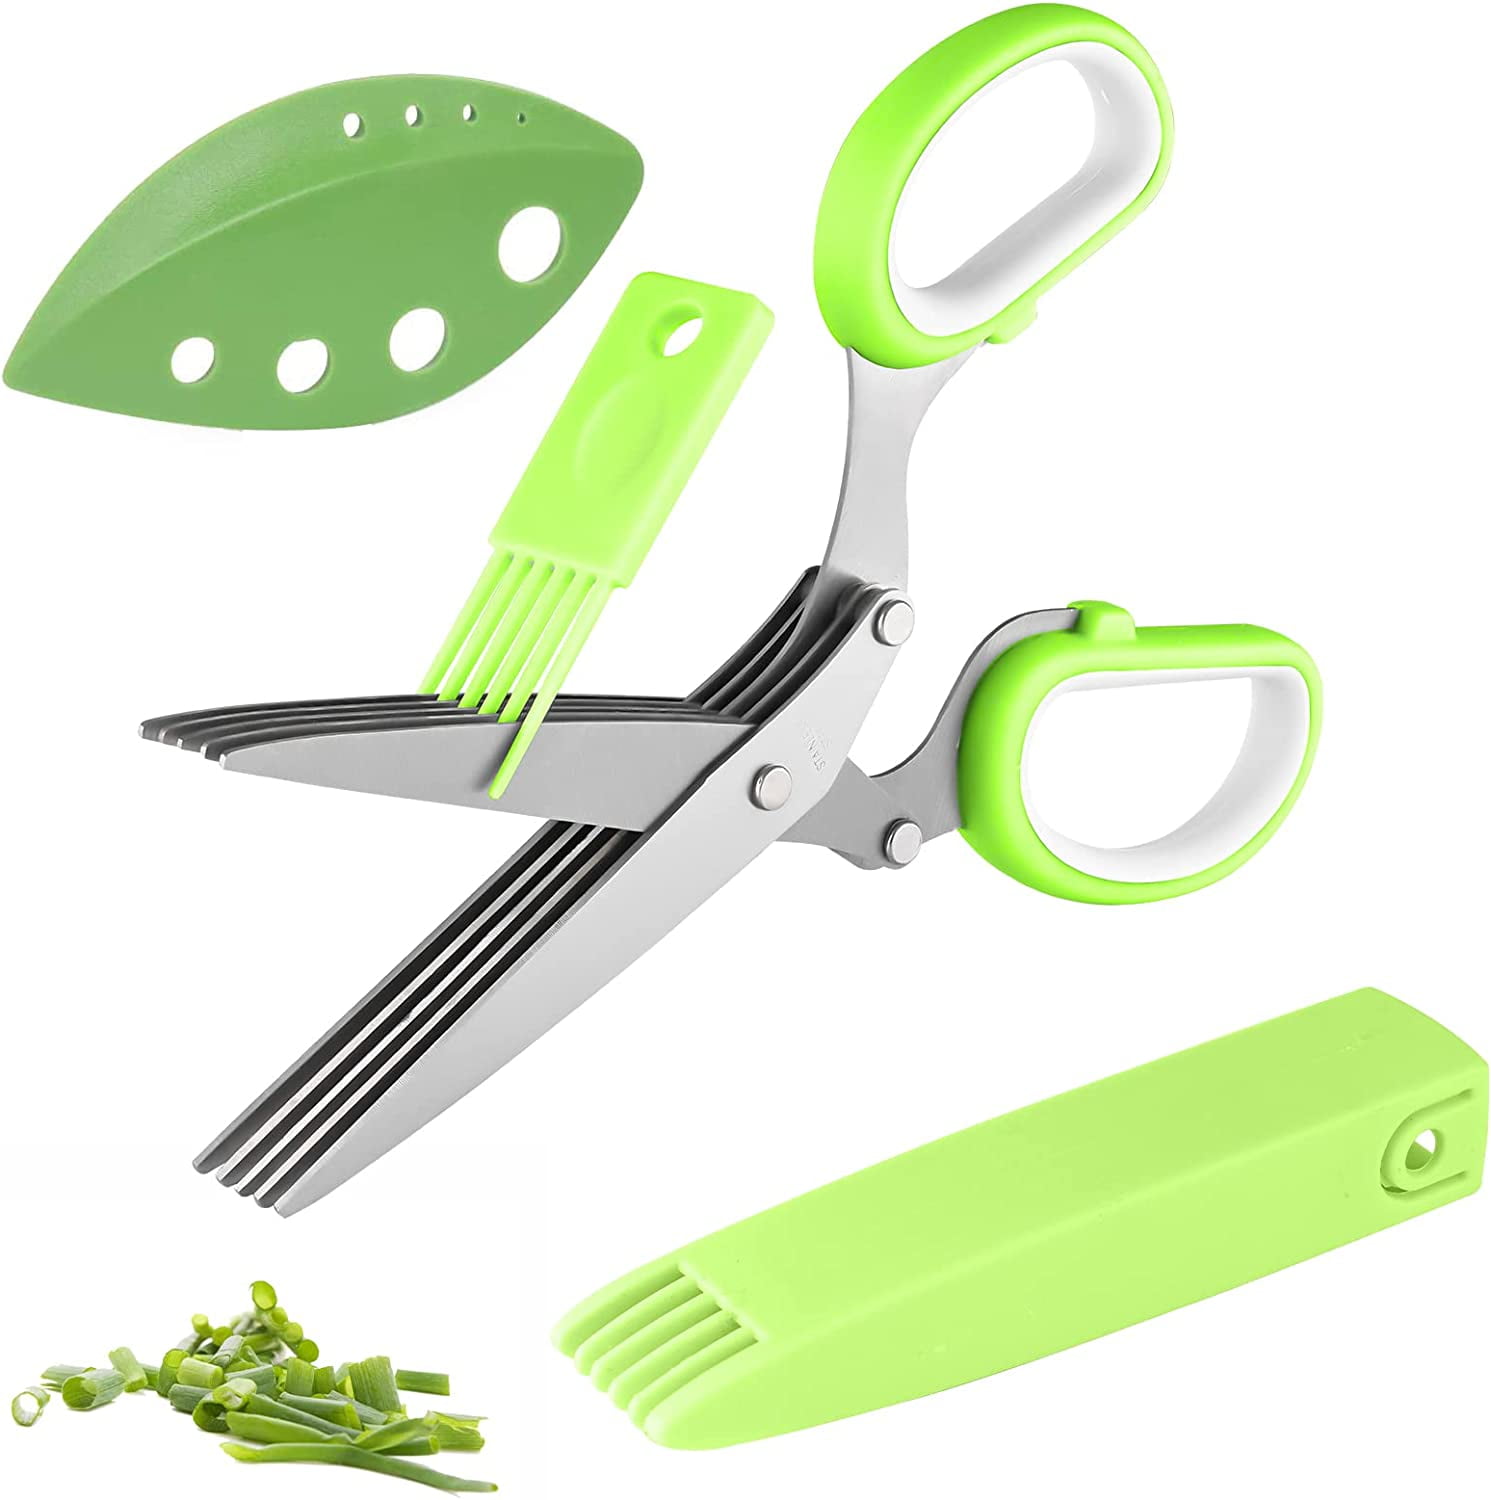 Herb Scissors Set Cool Kitchen Gadgets Gifts Kitchen Shears Scissors w -  Jolinne